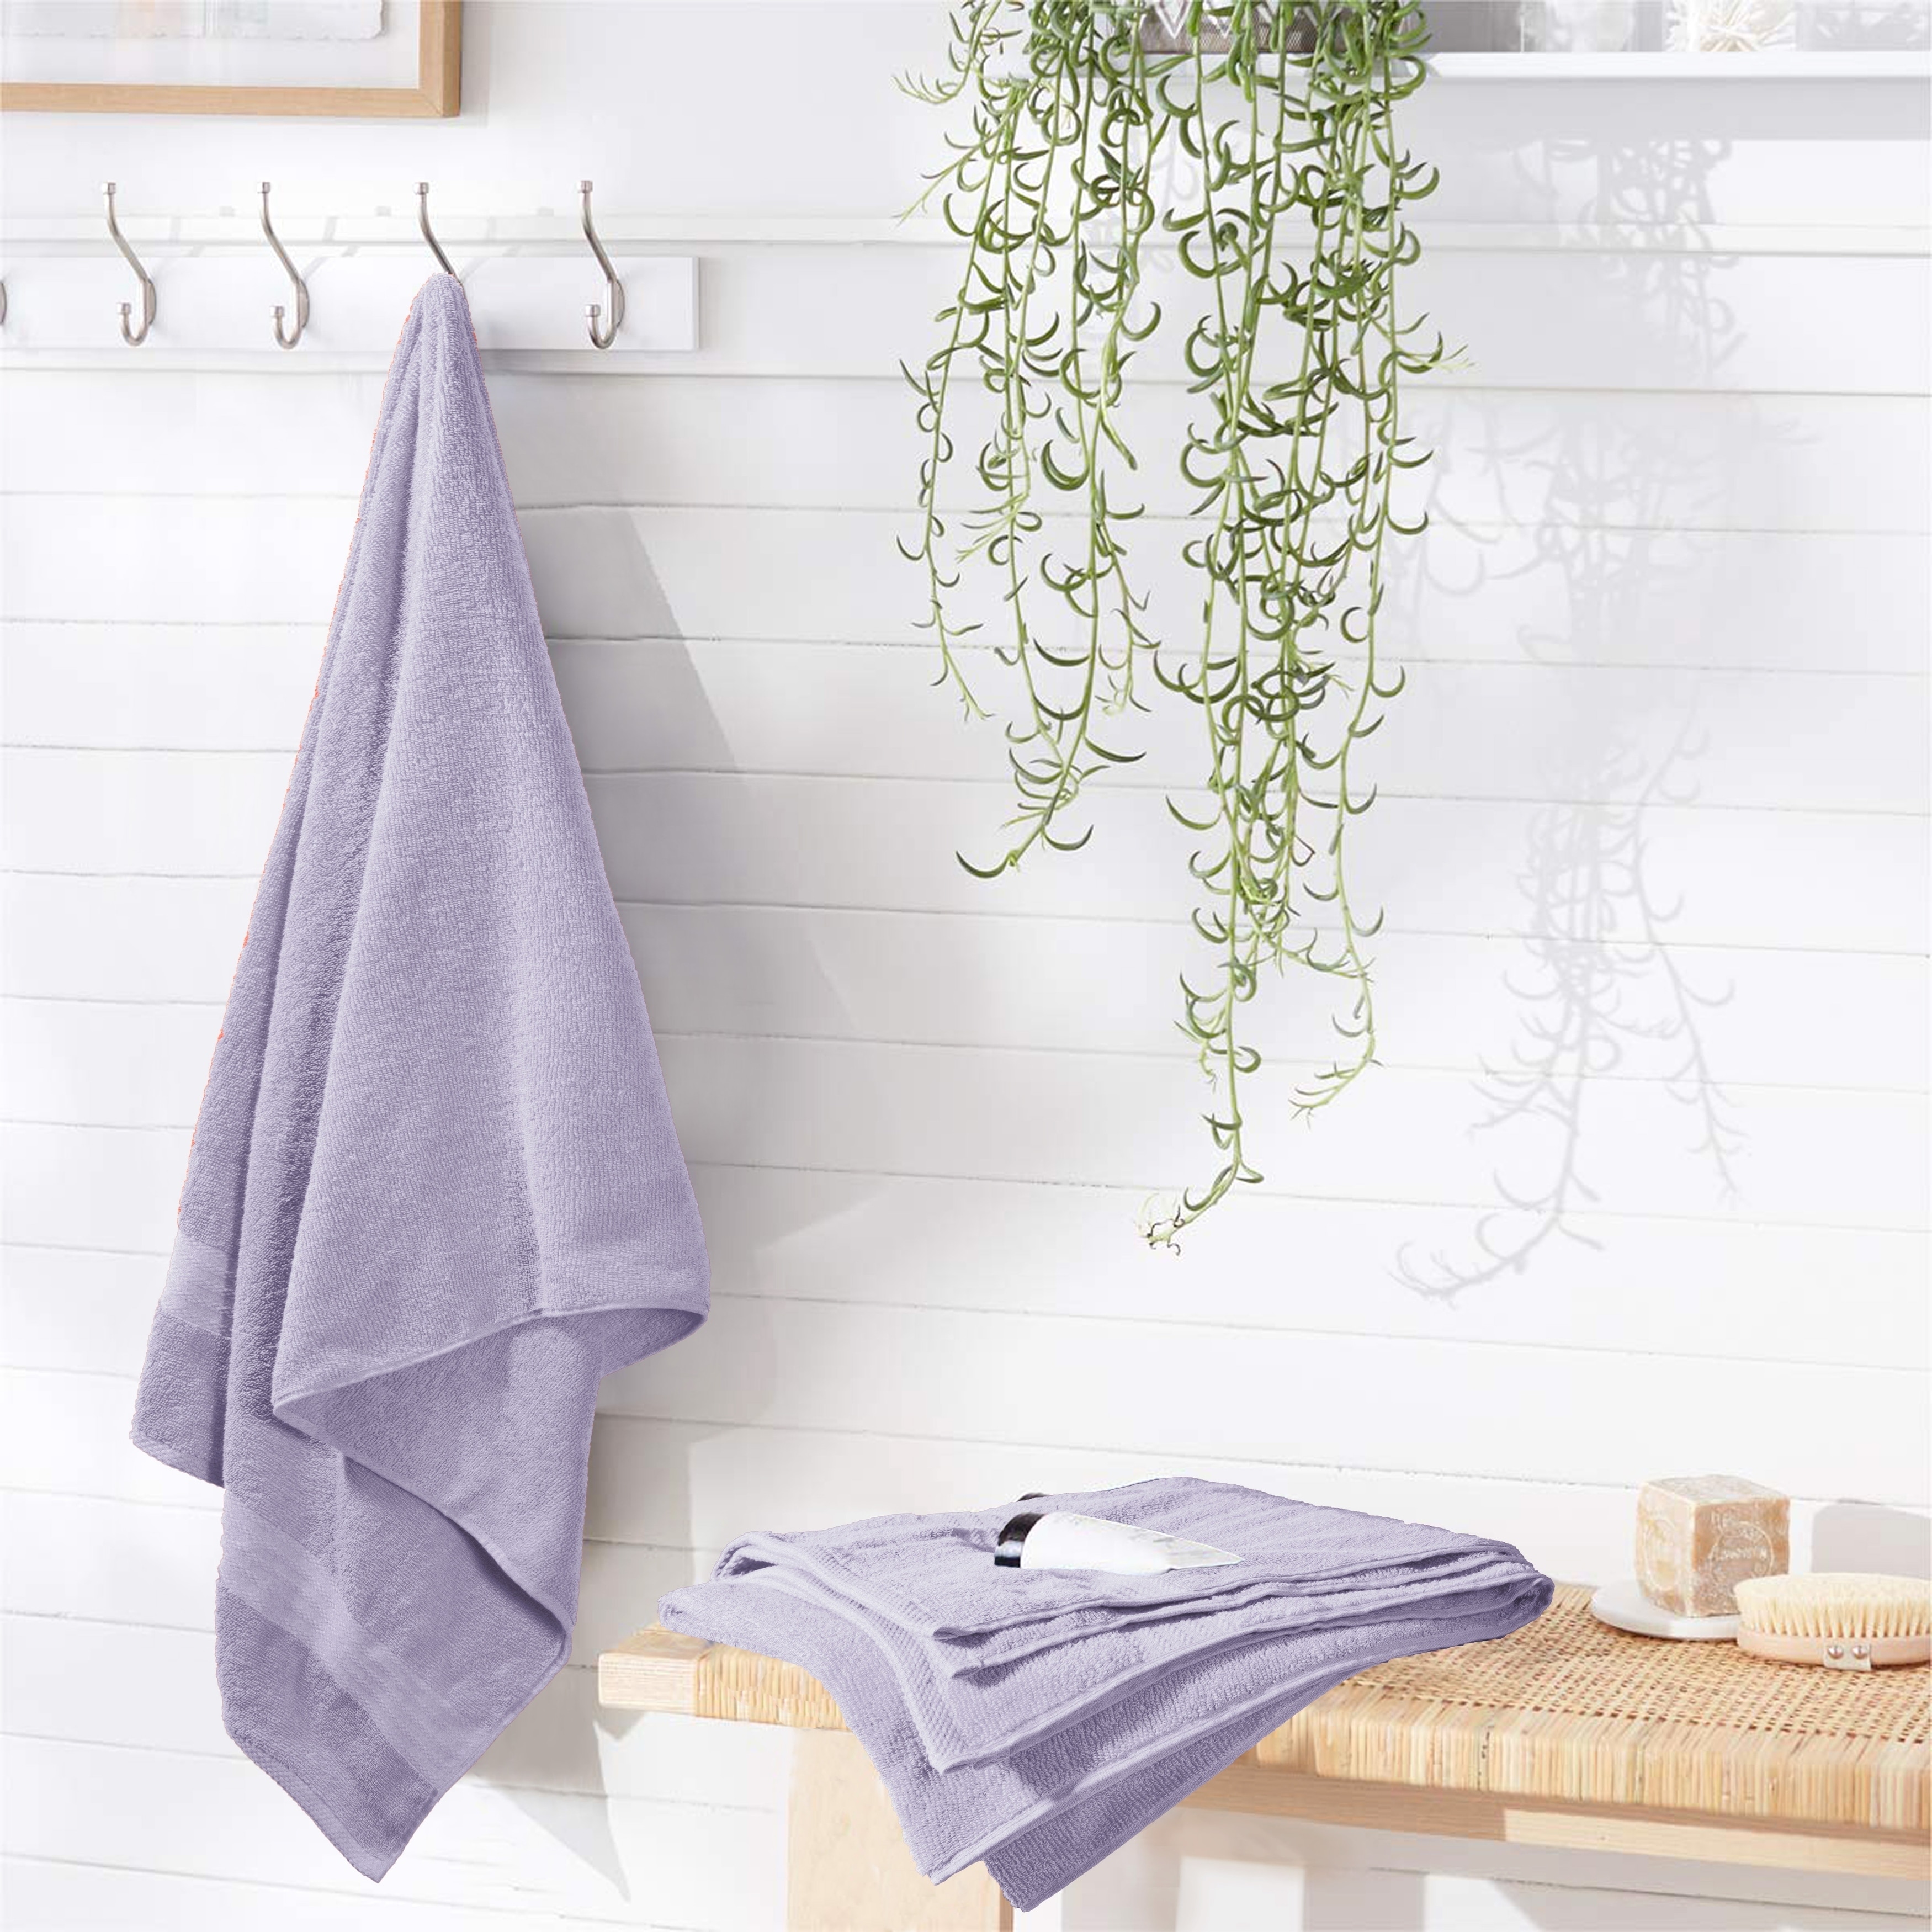 https://ak1.ostkcdn.com/images/products/30363975/Glamburg-Premium-Cotton-4-Pack-Bath-Towel-Set-100-Pure-Cotton-4-Bath-Towels-27x54-Ultra-Soft-Highly-Absorbent-1cc2d8c1-803c-4163-b1b7-dcb945d6ac60.jpg